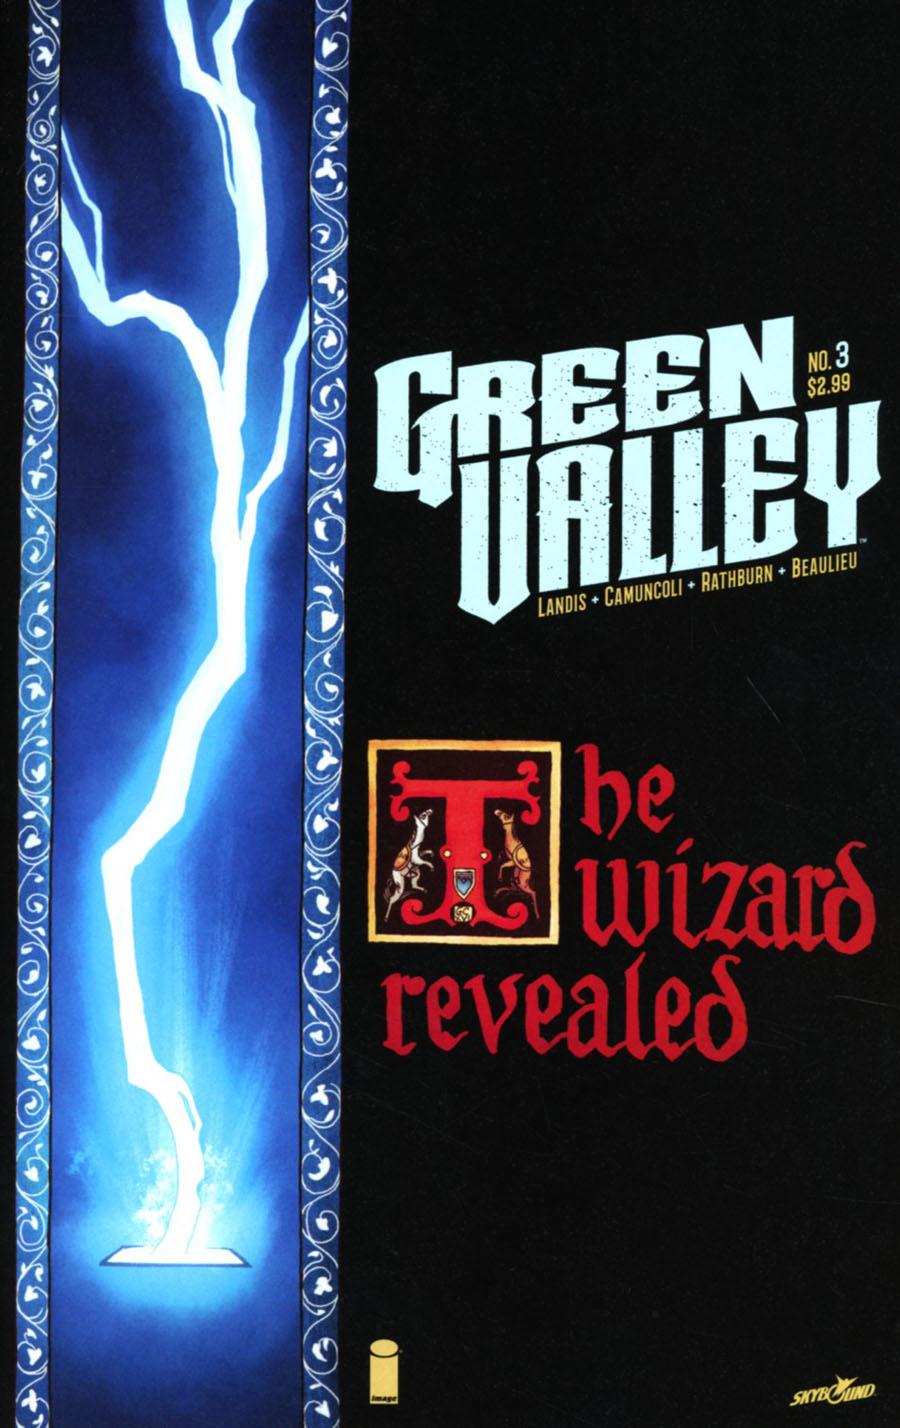 Green Valley Vol. 1 #3